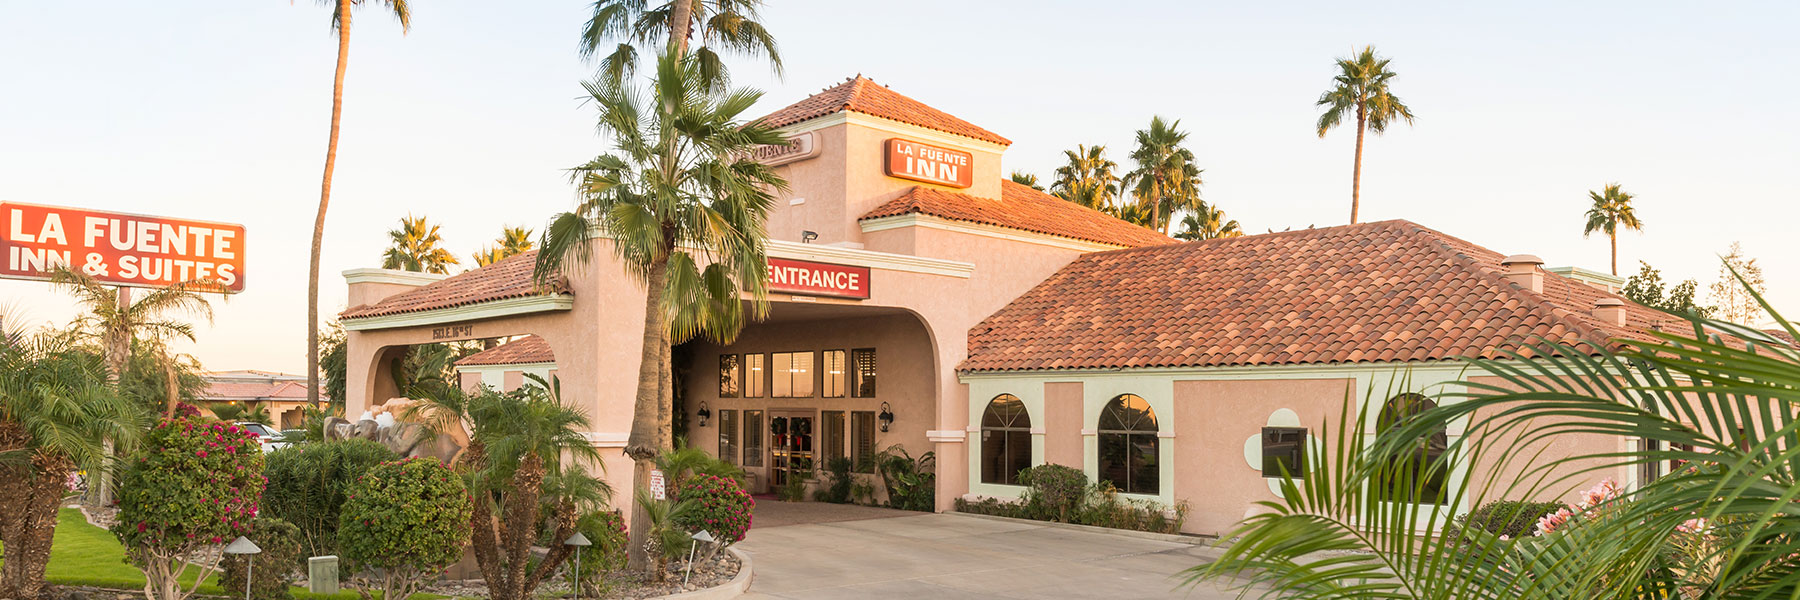 Sitemap at La Fuente Inn & Suites Hotel, Yuma, Arizona